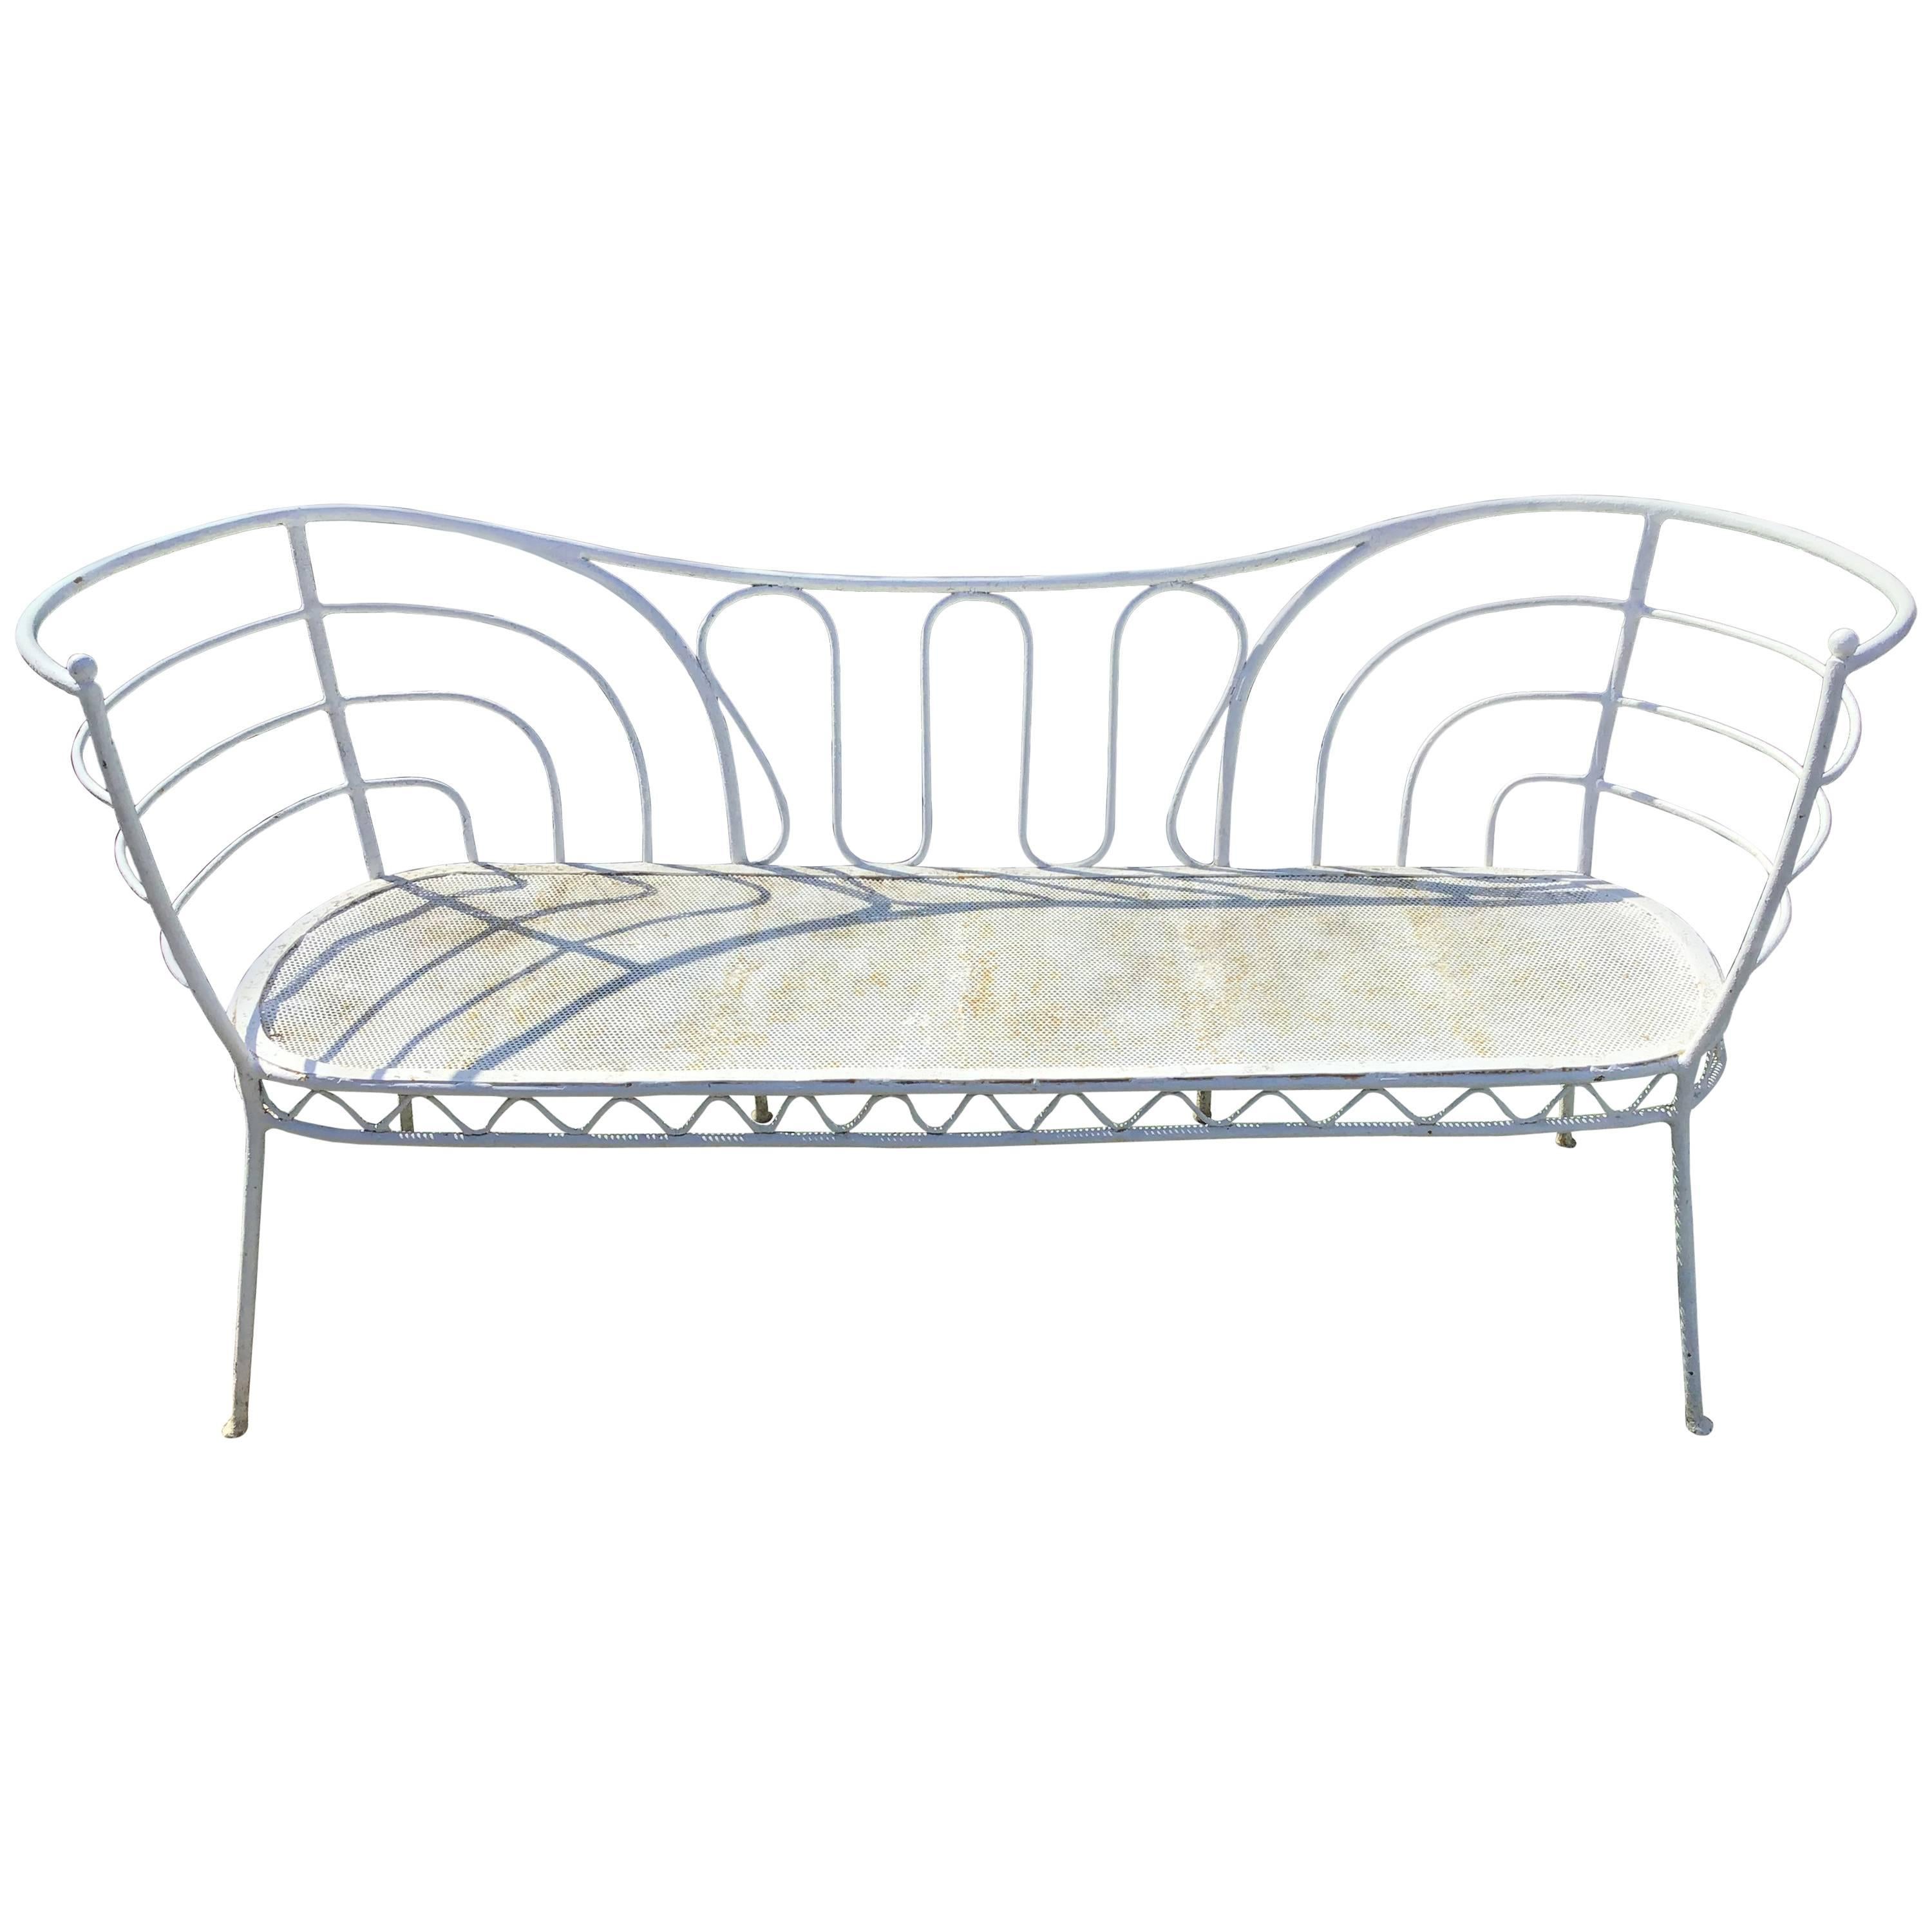 Italian Midcentury Garden Sofa in White Laquered Iron from 1950s